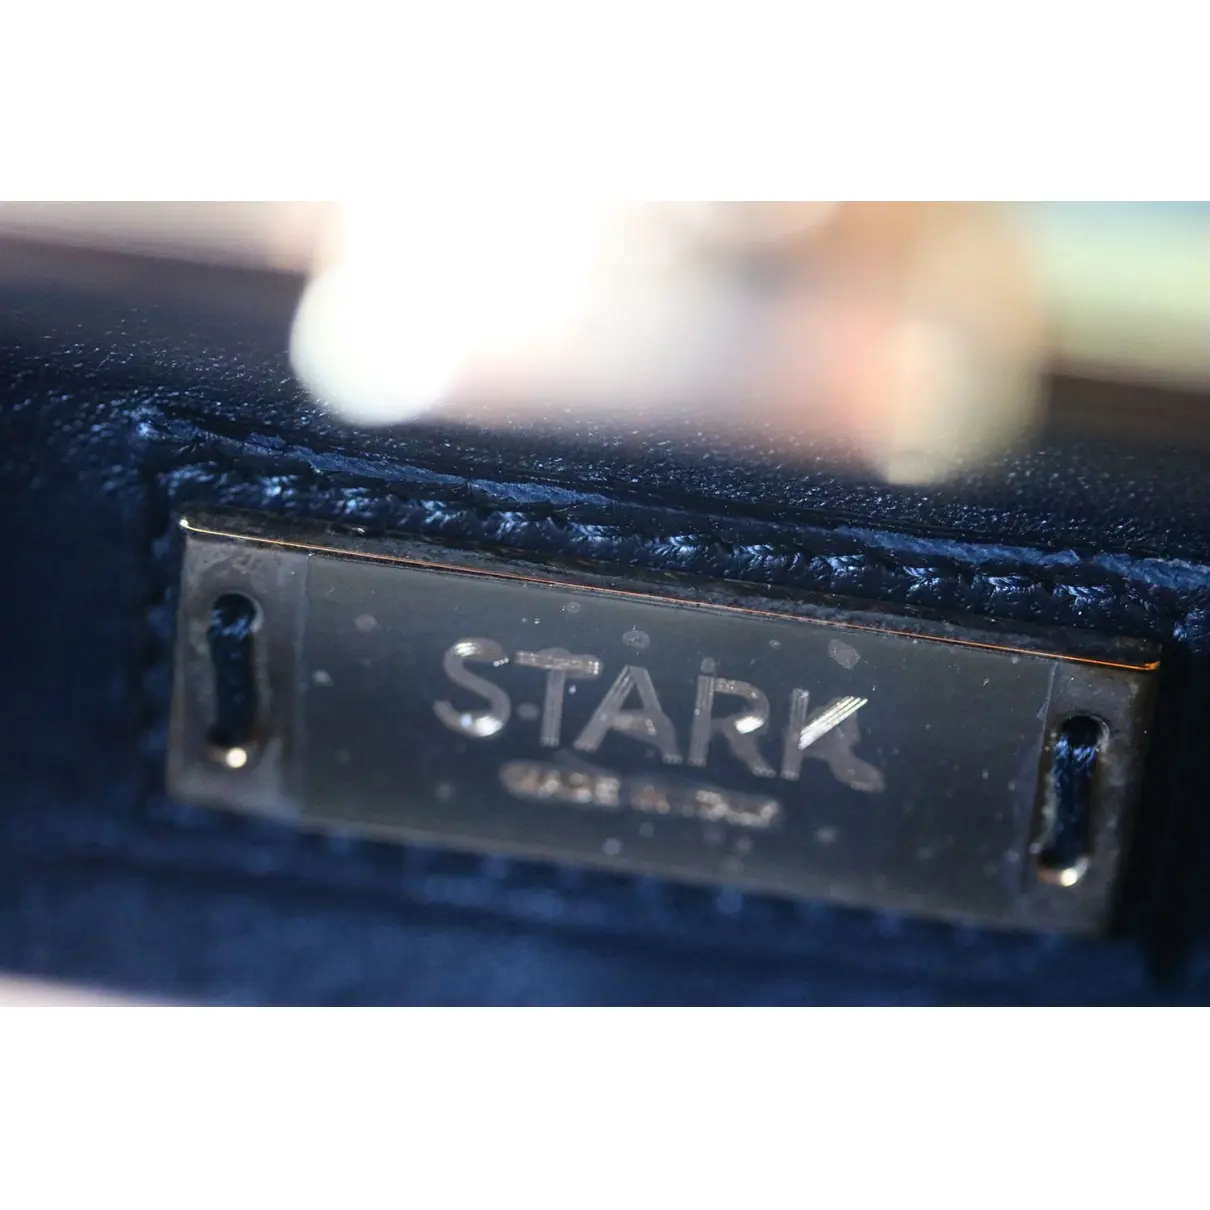 Leather clutch bag Stark